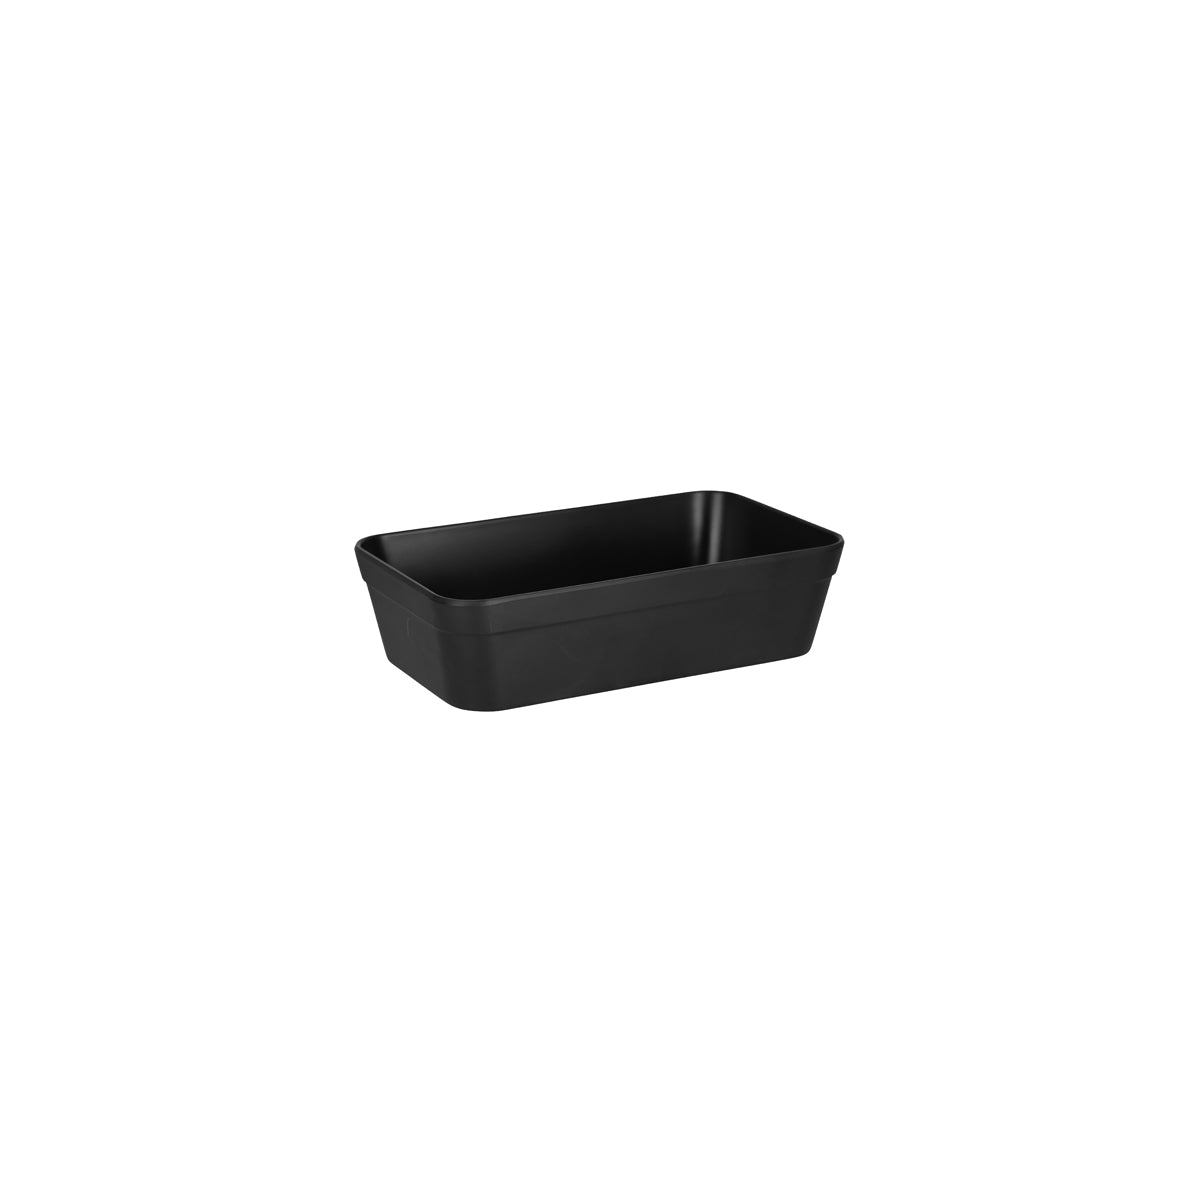 46388 Zicco Bento Box Black Insert Bowl Solid Large Tomkin Australia Hospitality Supplies